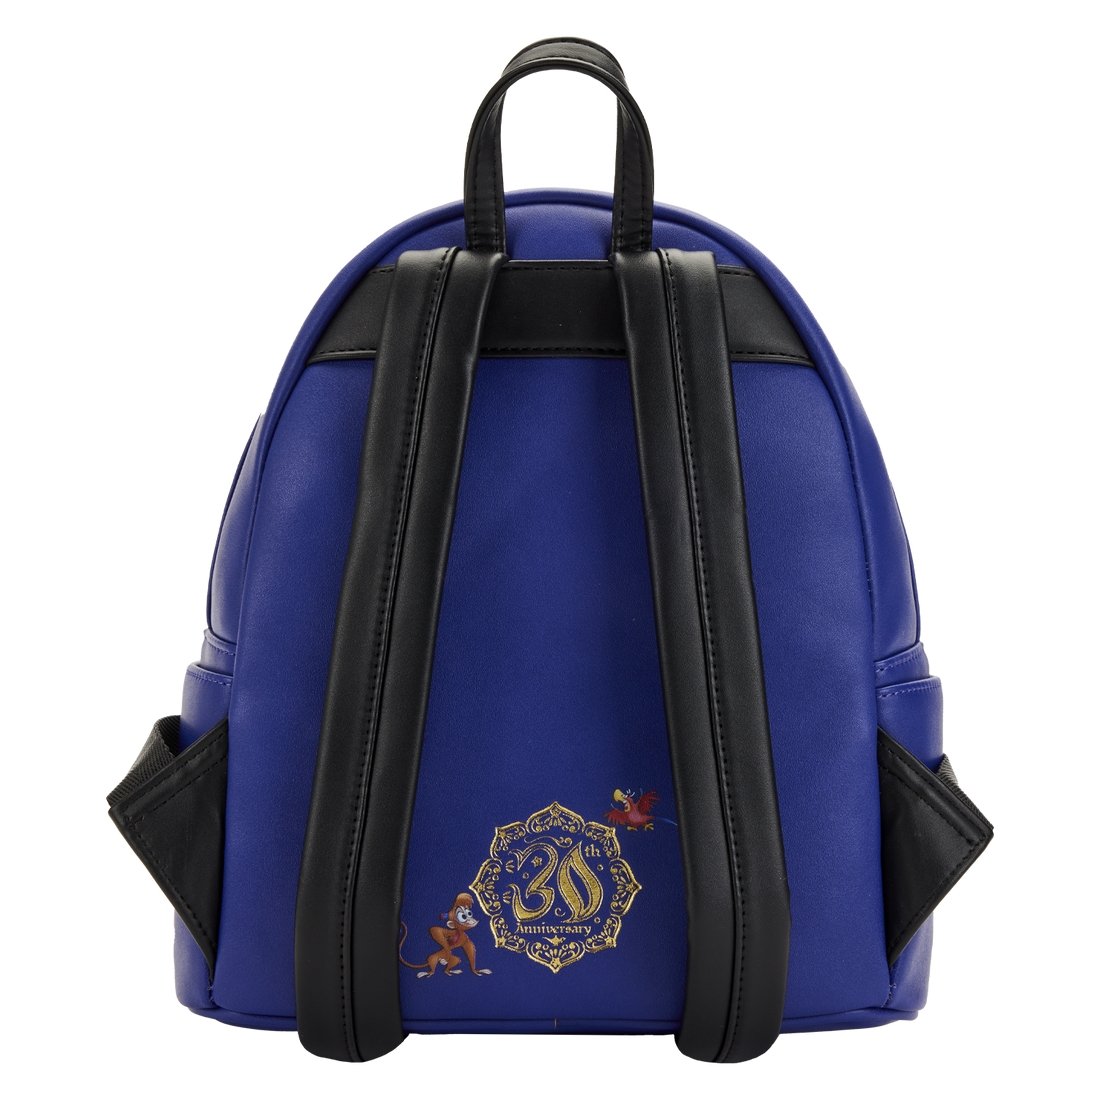 Aladdin 30th Anniversary Mini Backpack - Rockamilly-Bags & Purses-Vintage